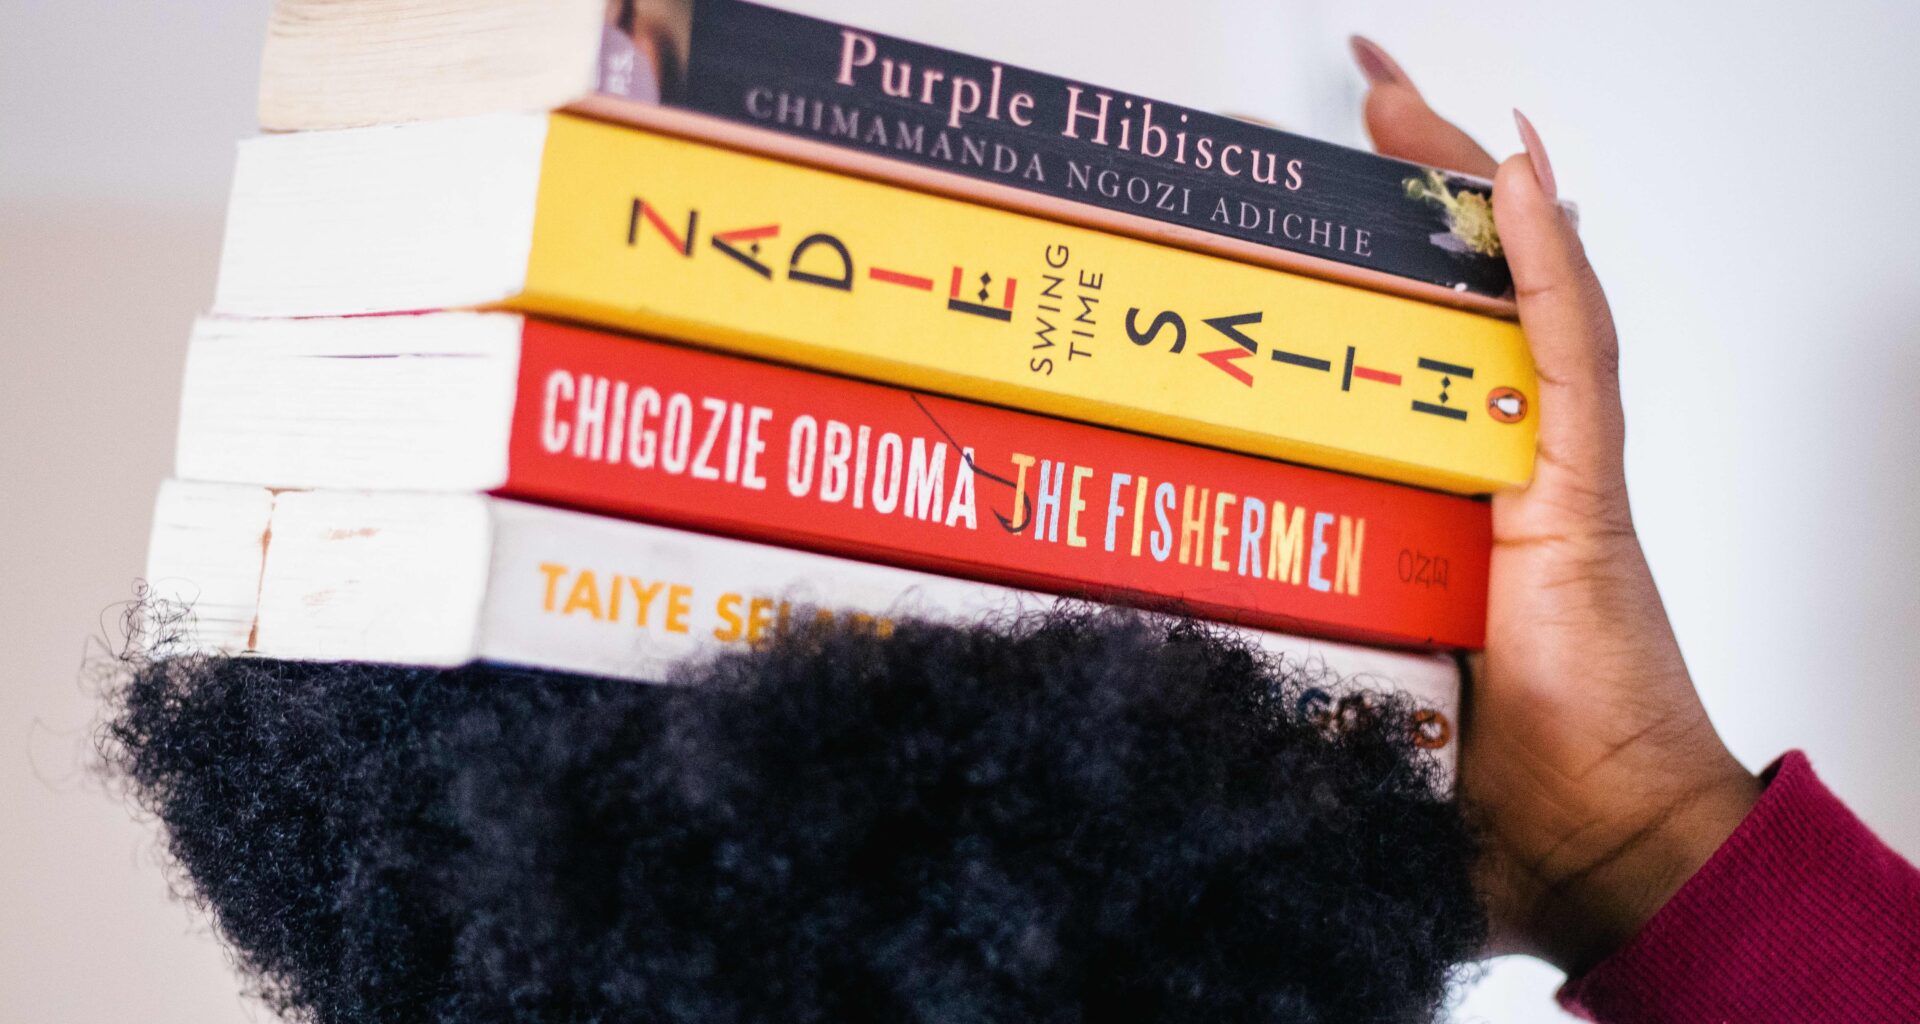 A Black woman balances works of Black literature on her head.